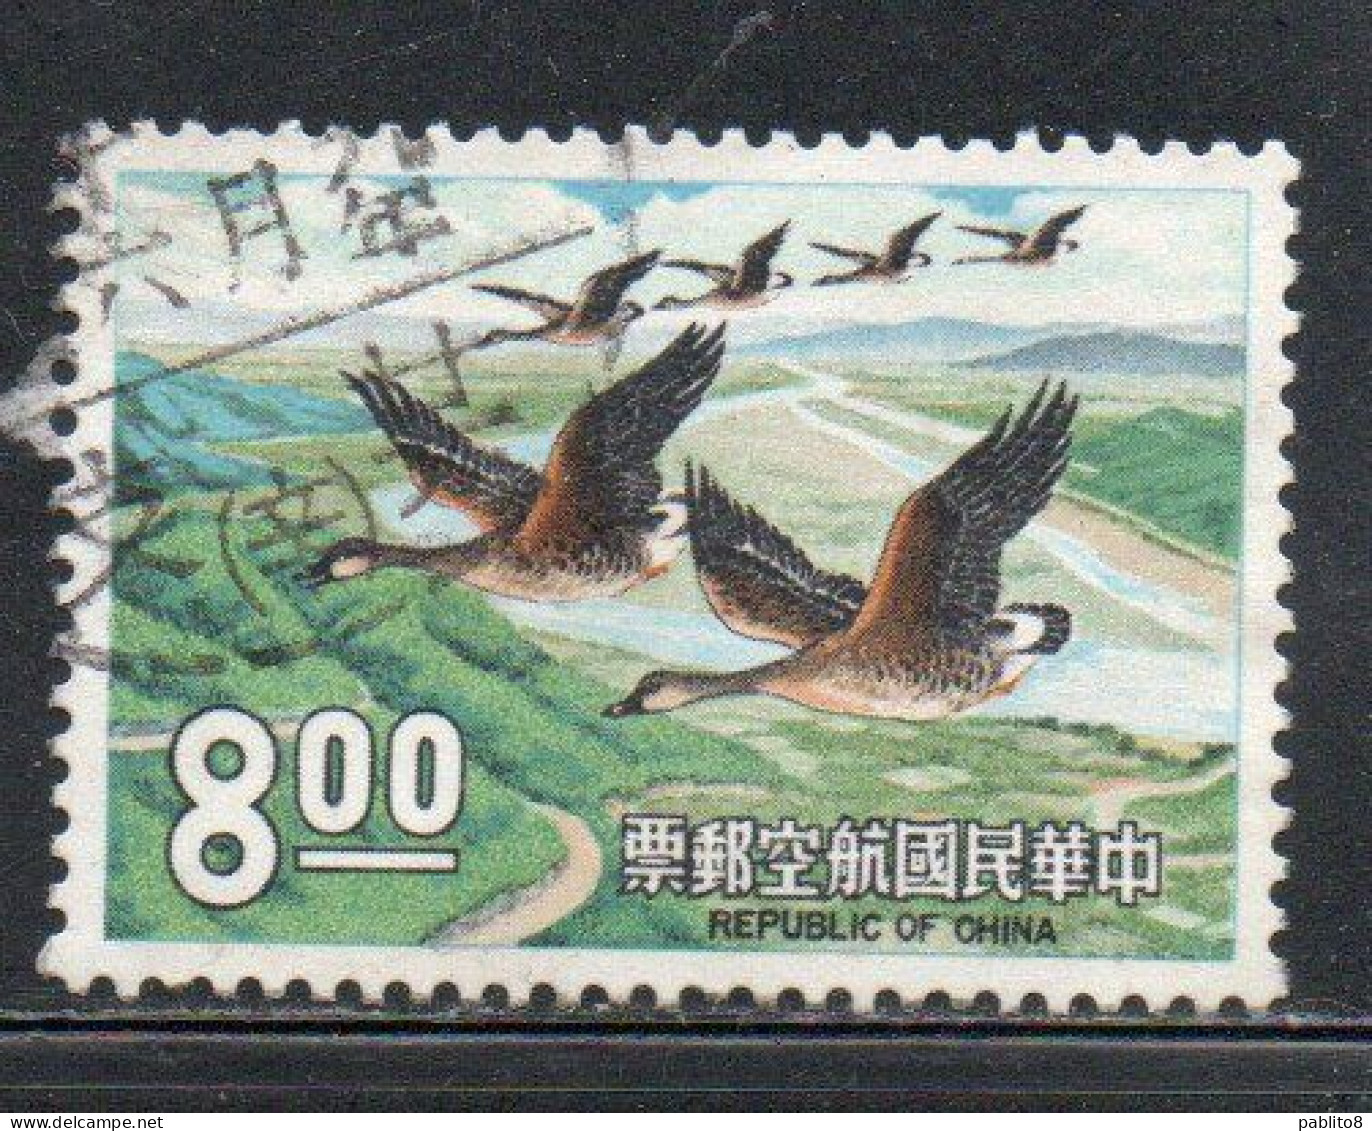 CHINA REPUBLIC CINA TAIWAN FORMOSA 1969 AIR POST MAIL AIRMAIL BIRD FAUNA BIRDS WILD GEESE FLIGT LAND 8$ USED USATO - Airmail